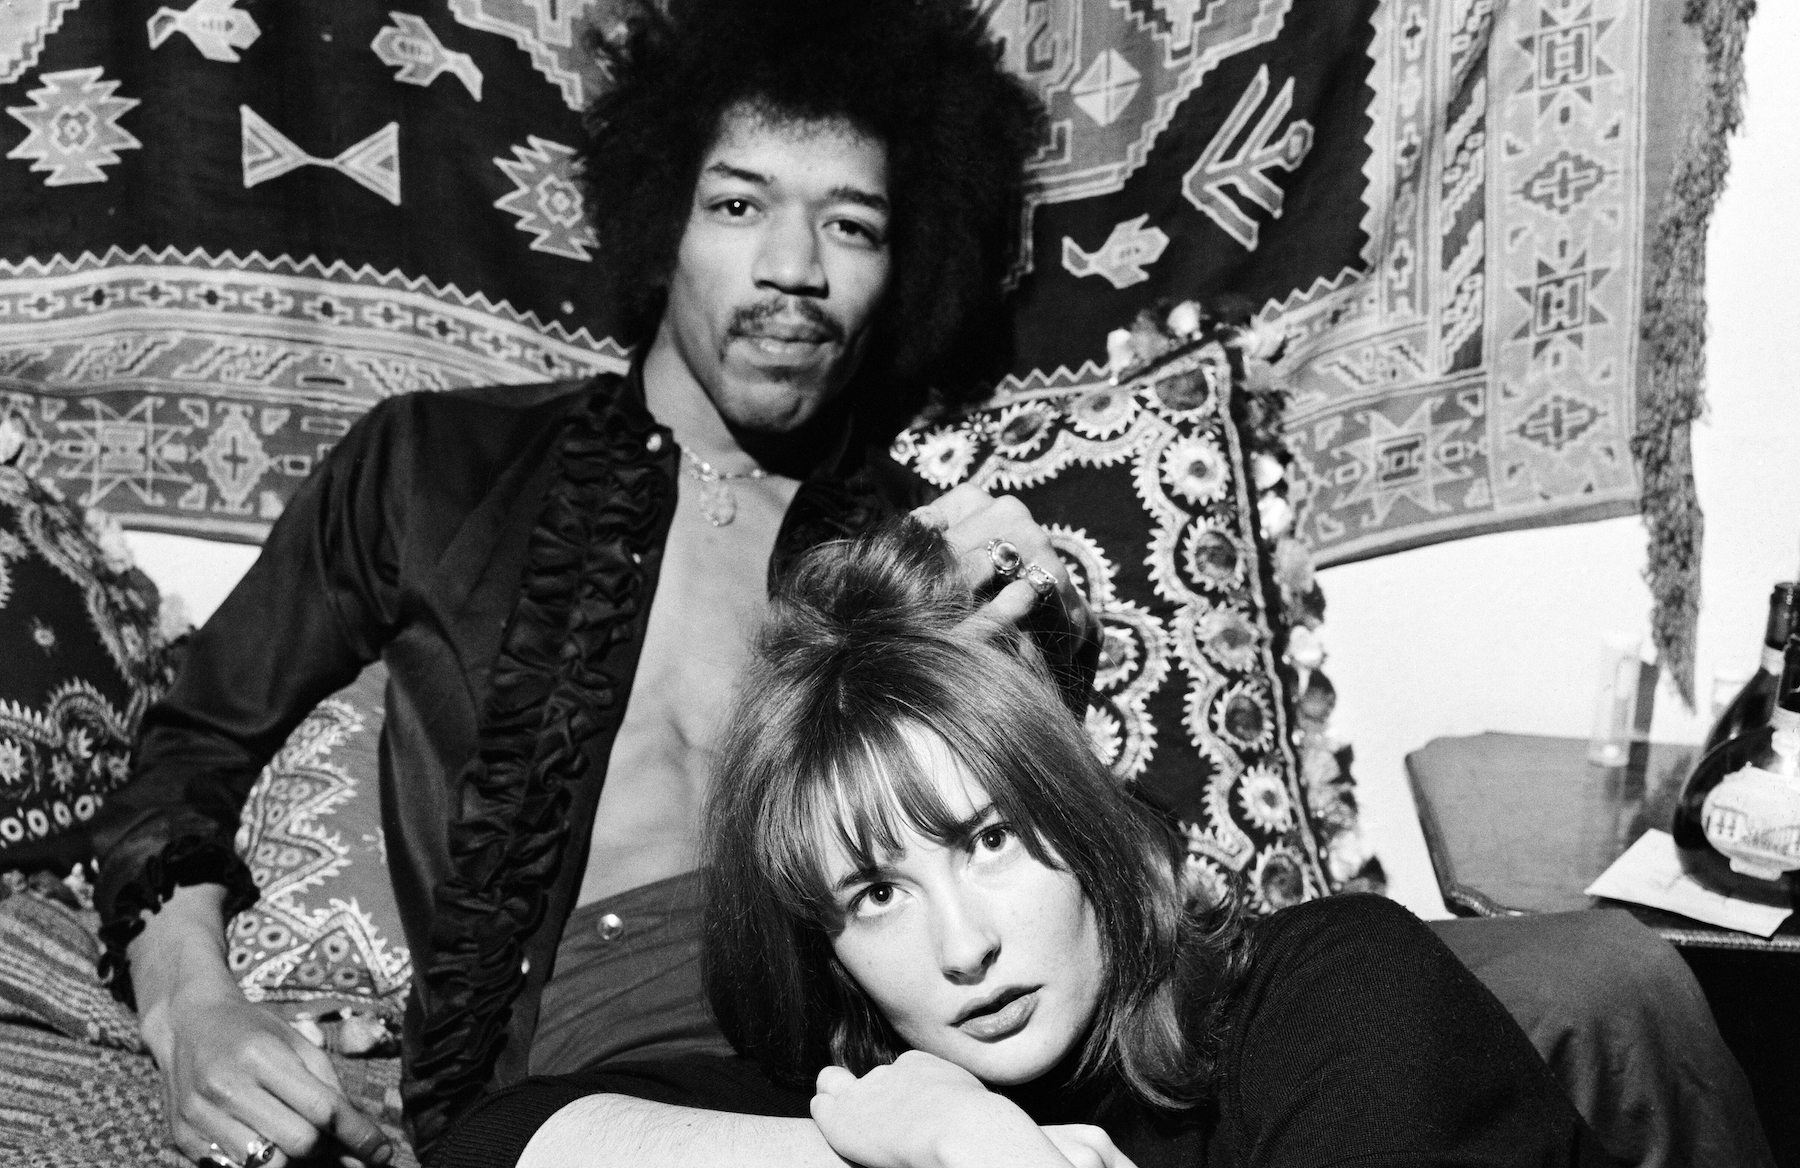 Jimi Hendrix and his girlfriend Kathy Etchingham